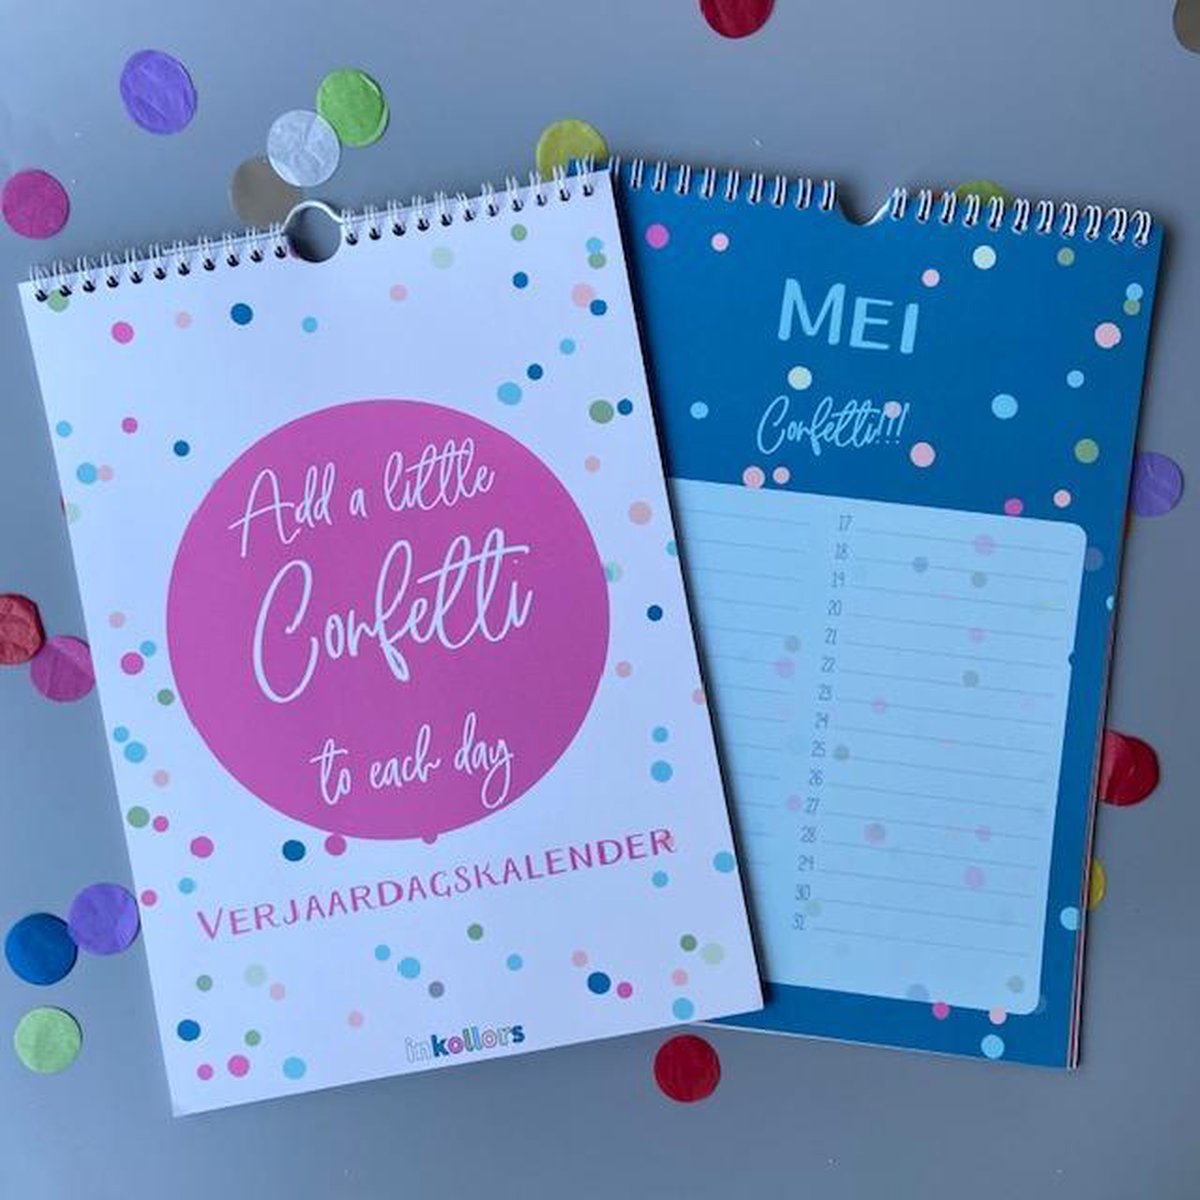 Verjaardagskalender - A4 - confetti - vrolijk - kalender - feest - familiekalender - verjaardag - inkollors - roze